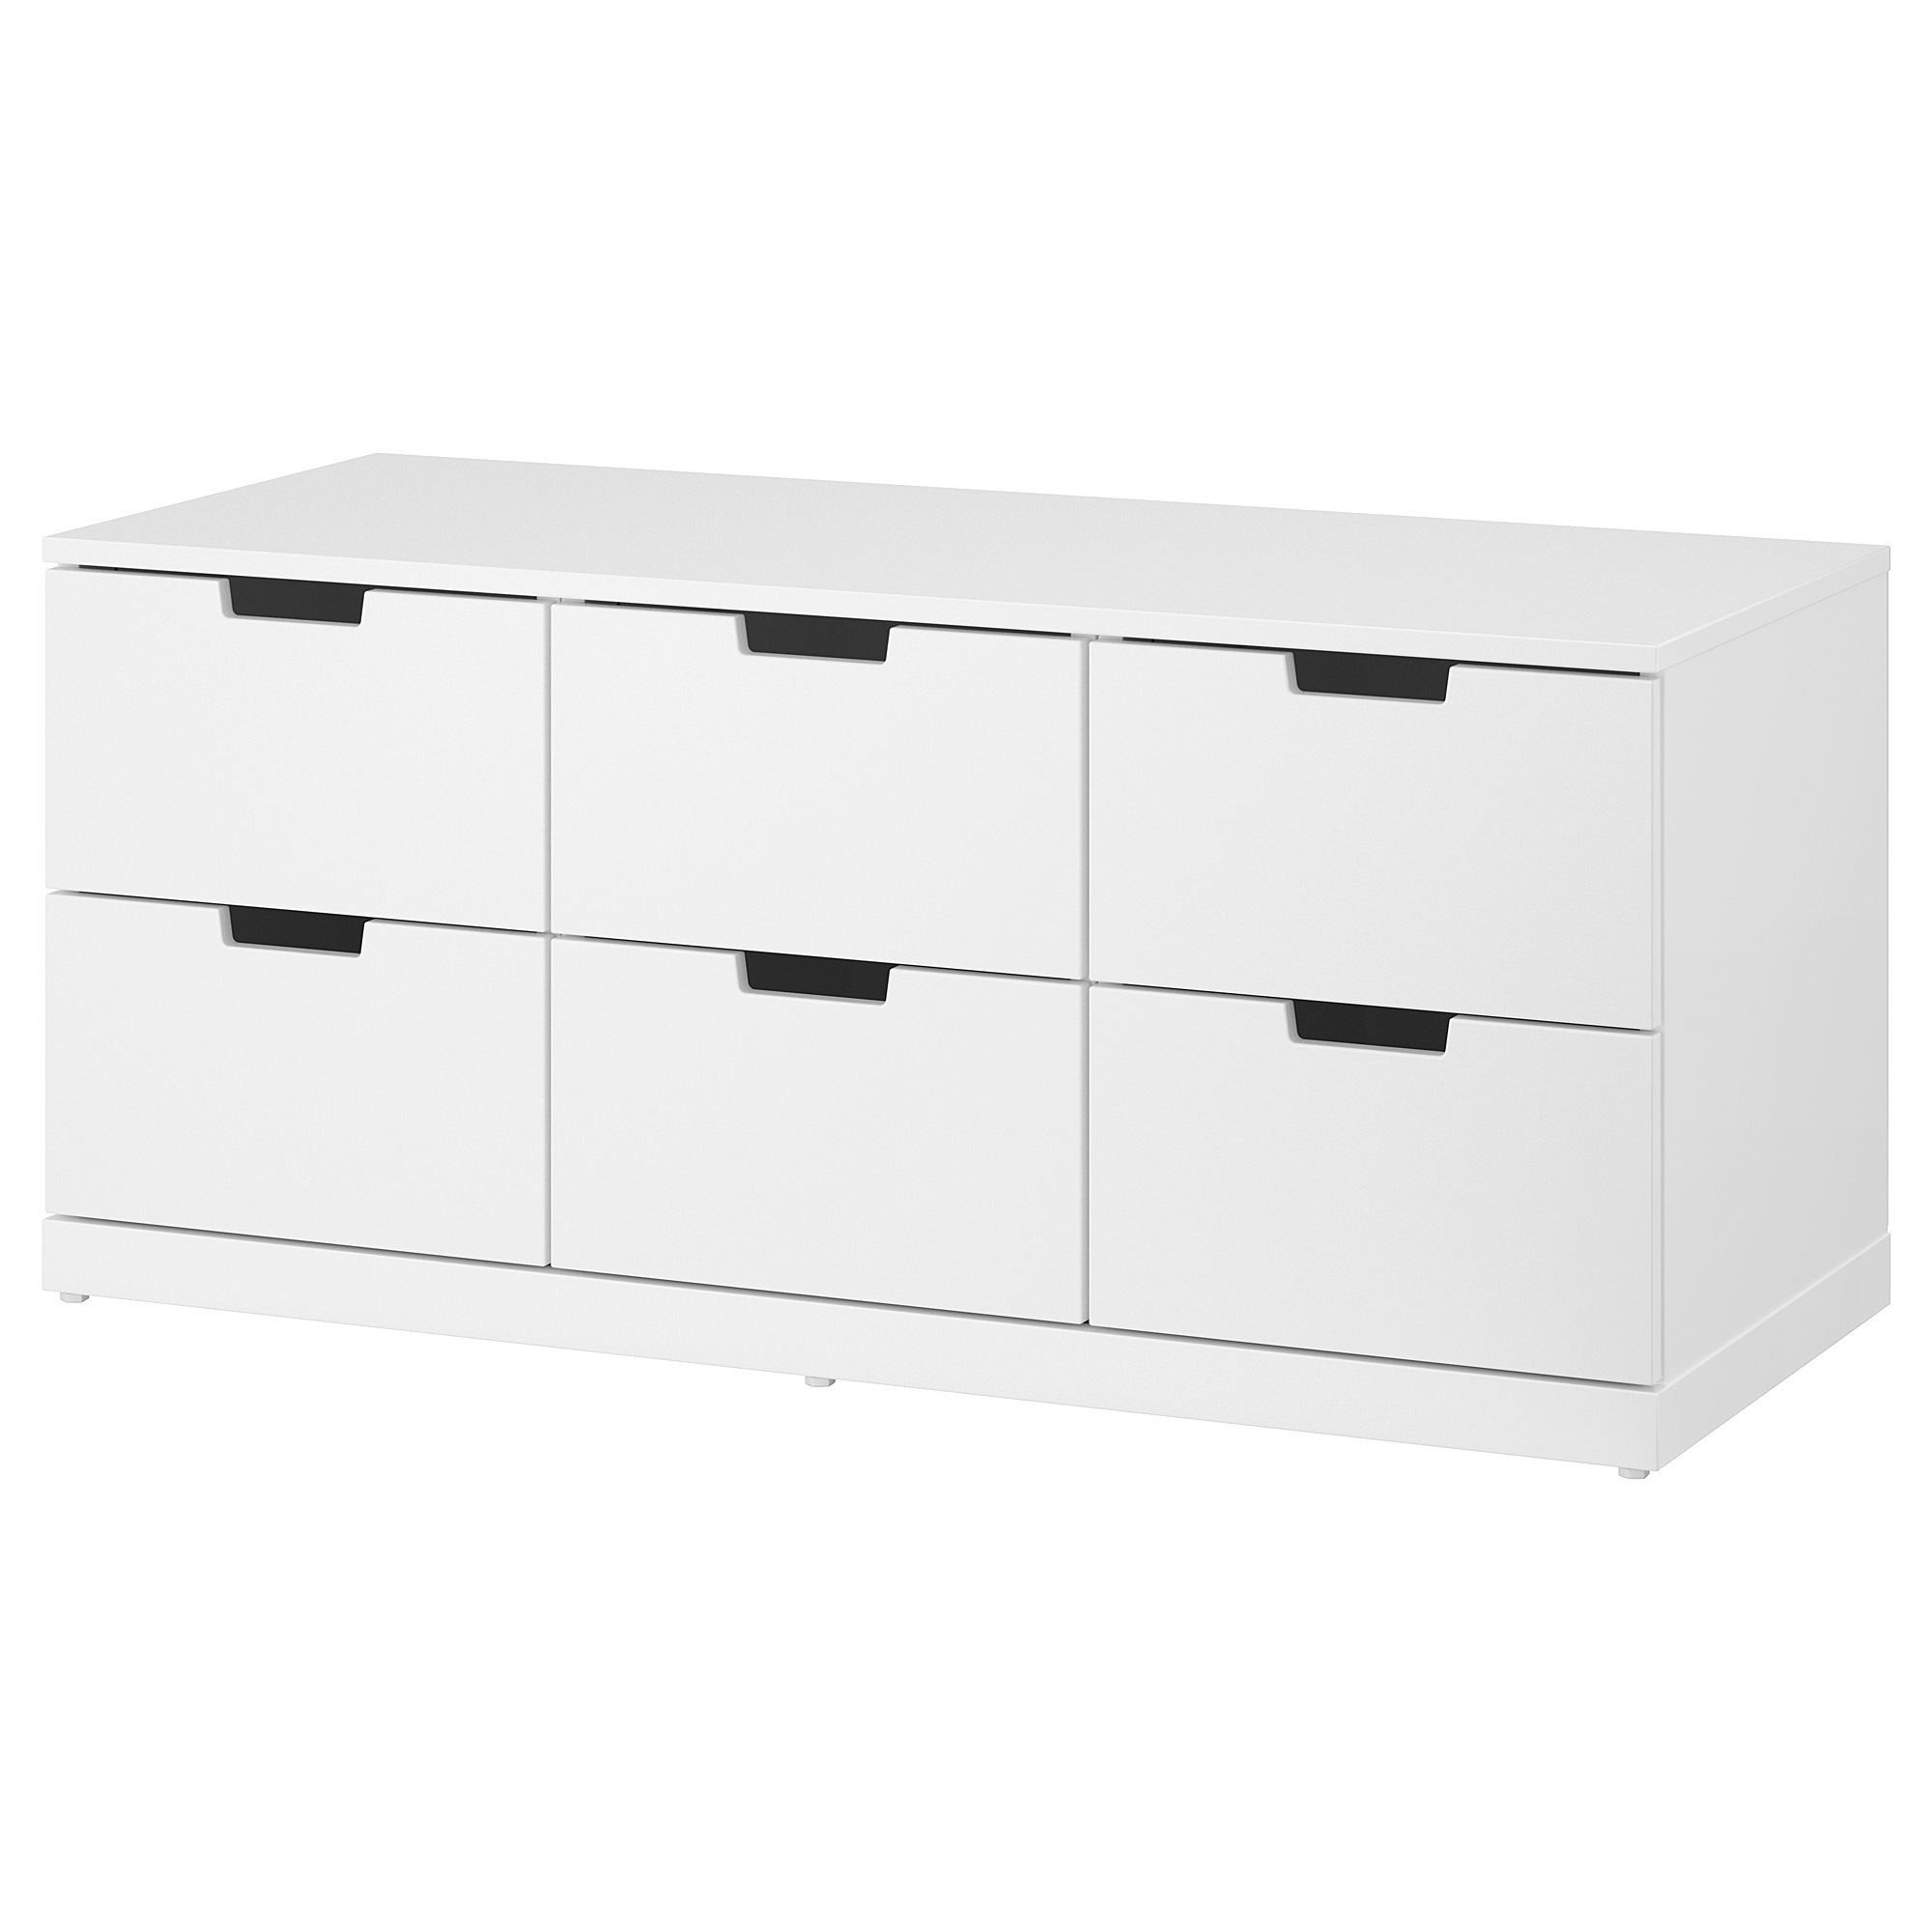 NORDLI chest of 6 drawers